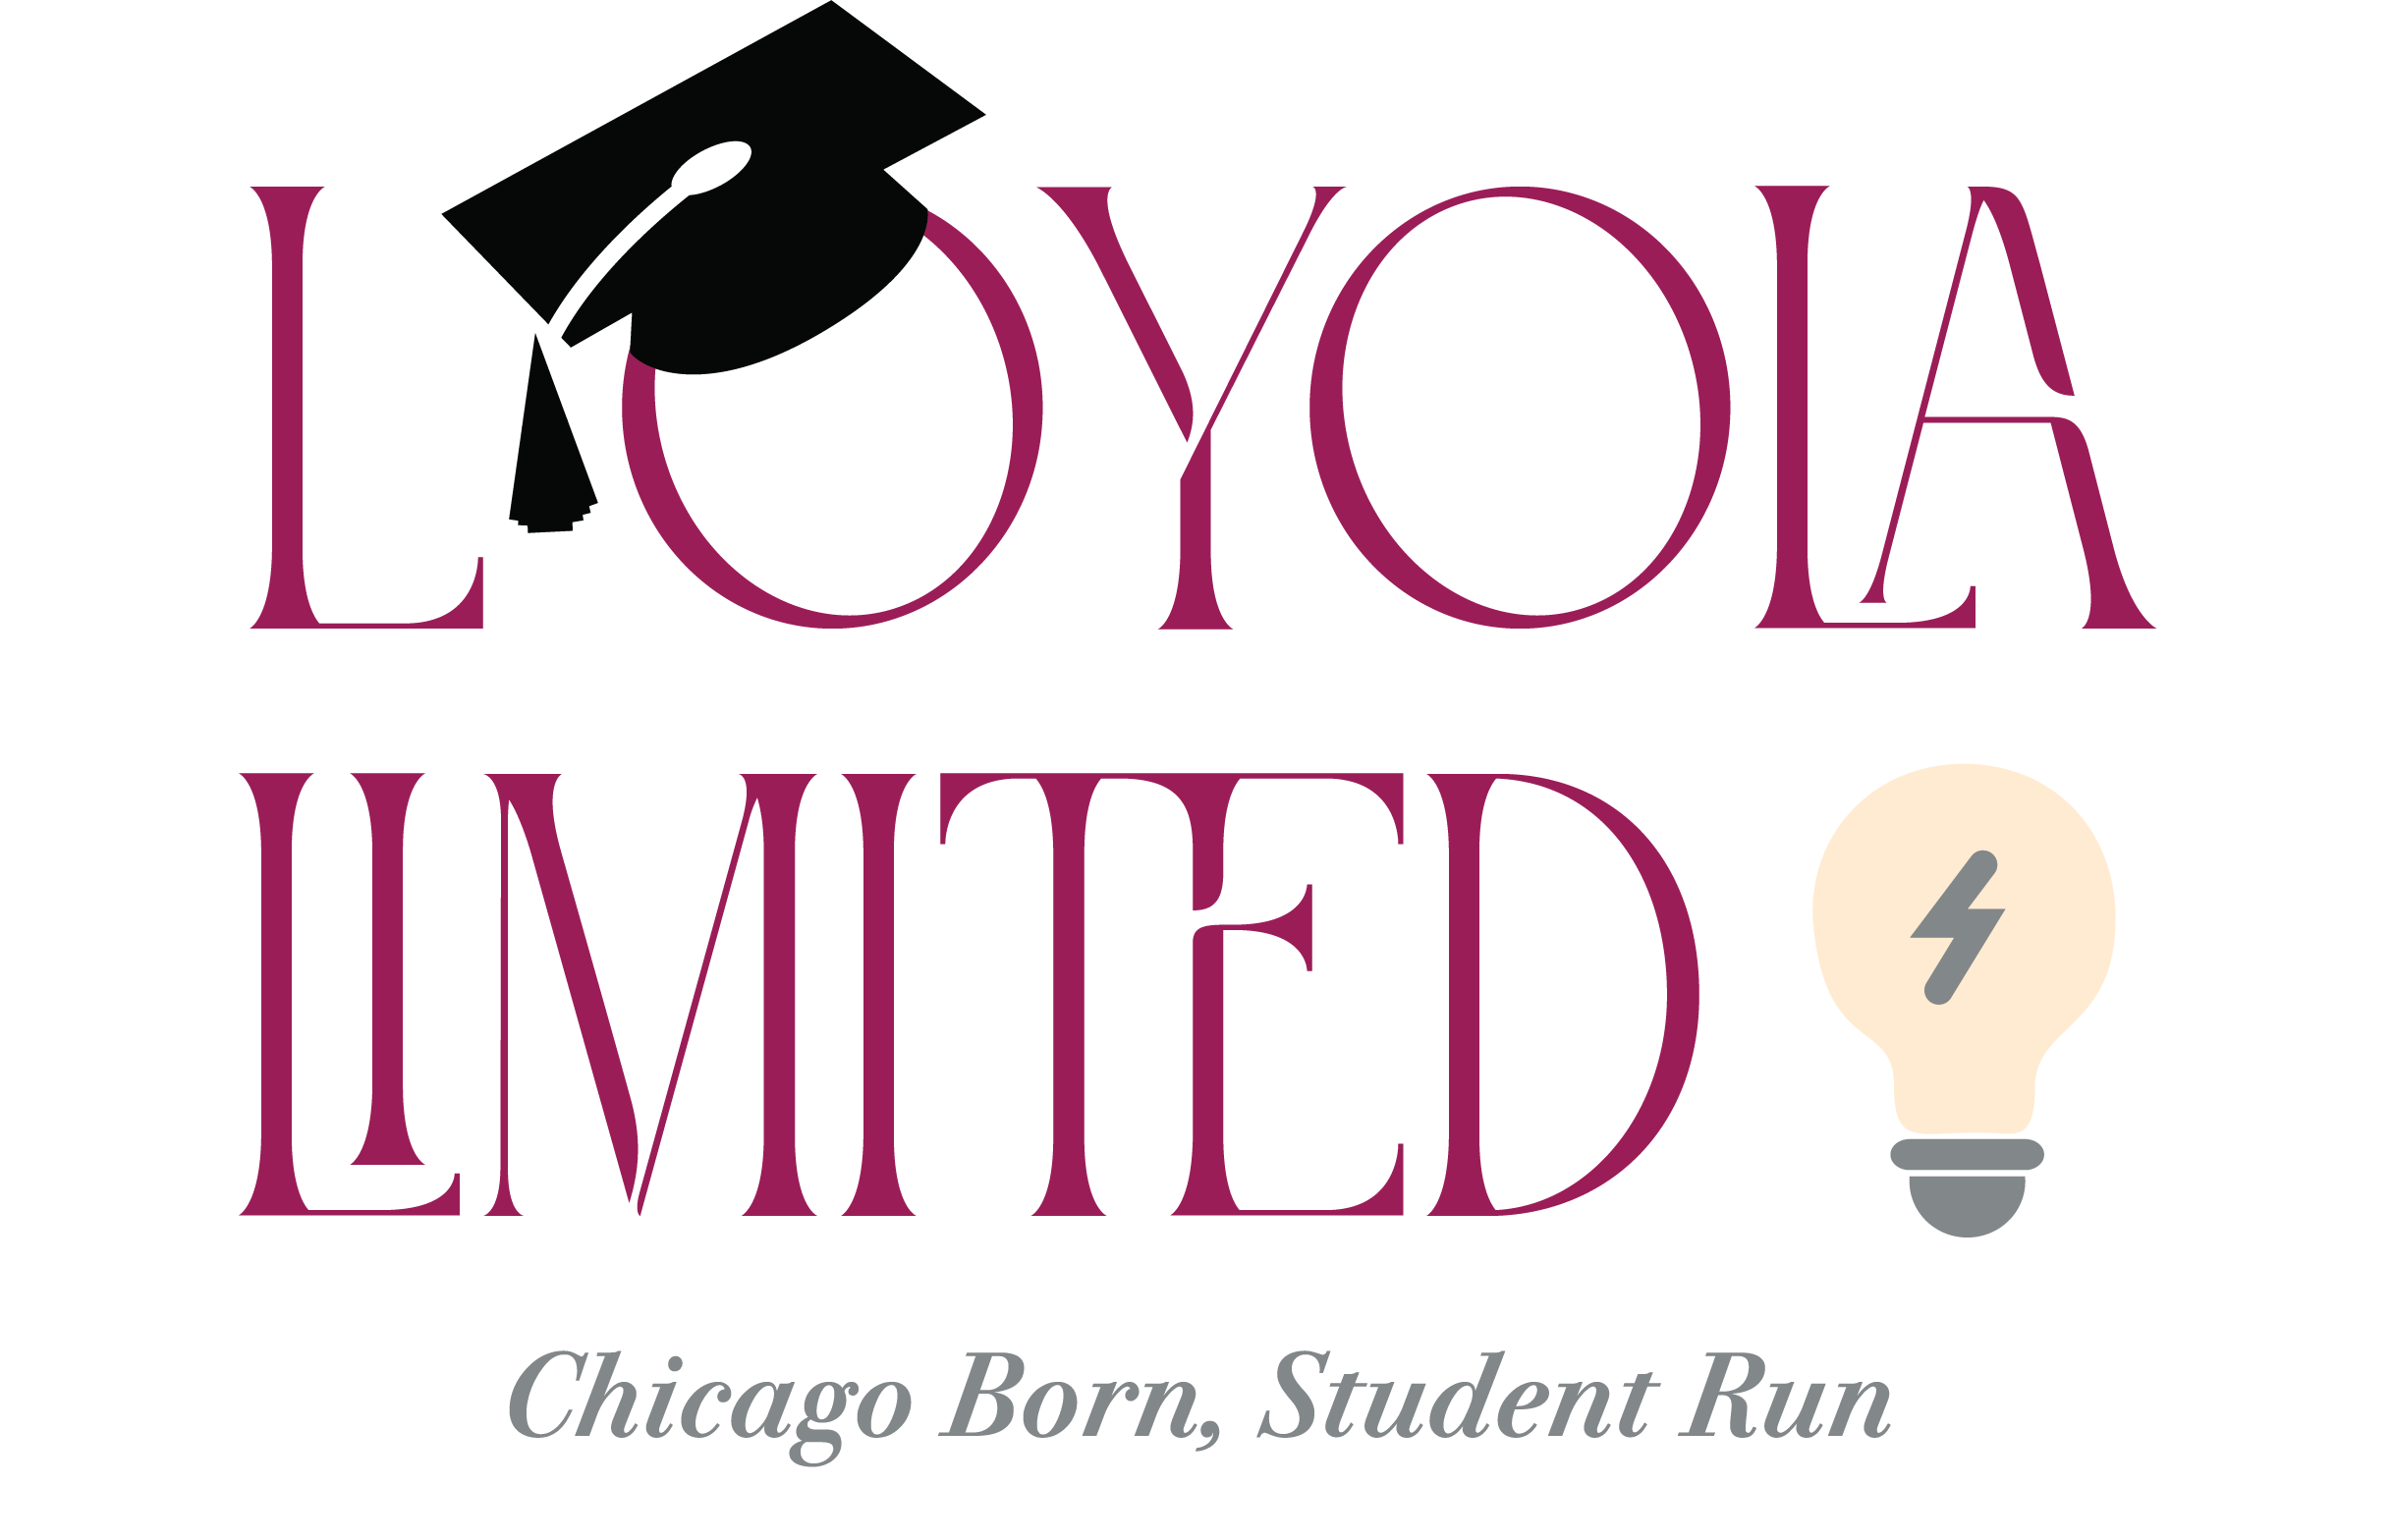 Loyola Limited